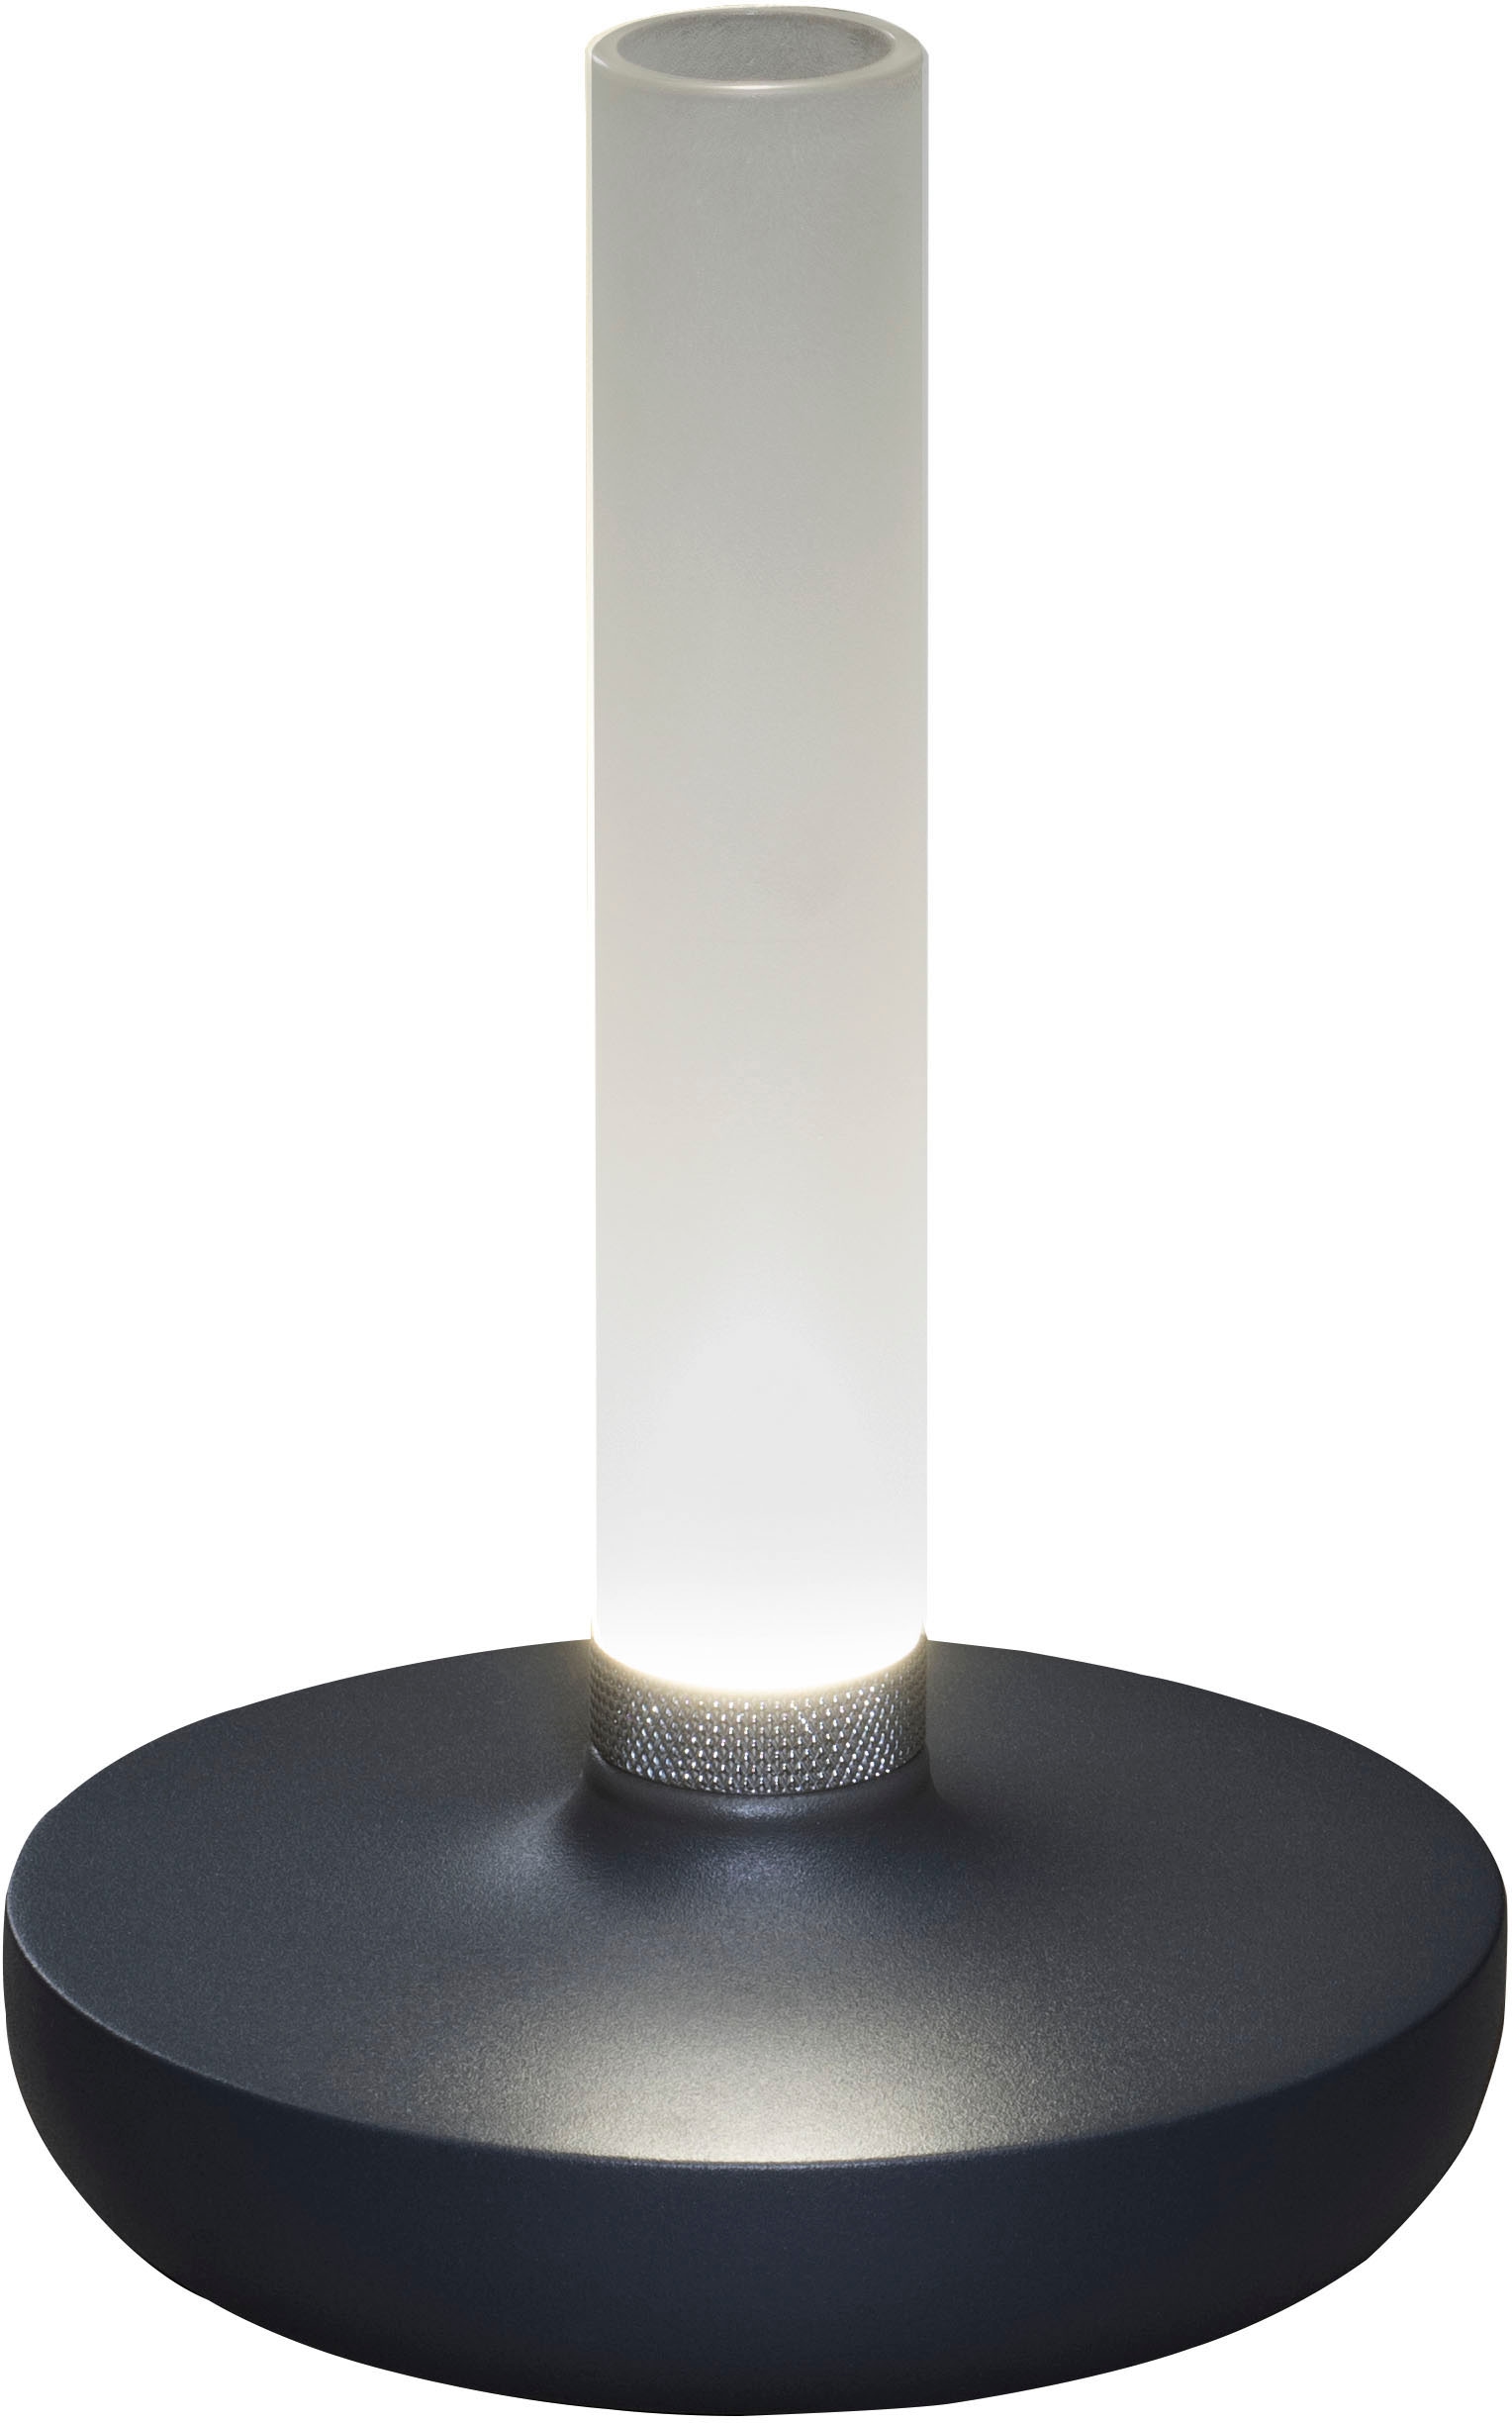 KONSTSMIDE LED Tischleuchte »Biarritz«, Biarritz USB-Tischvase dunkelgrau, 1800/2700/4000K, dimmbar